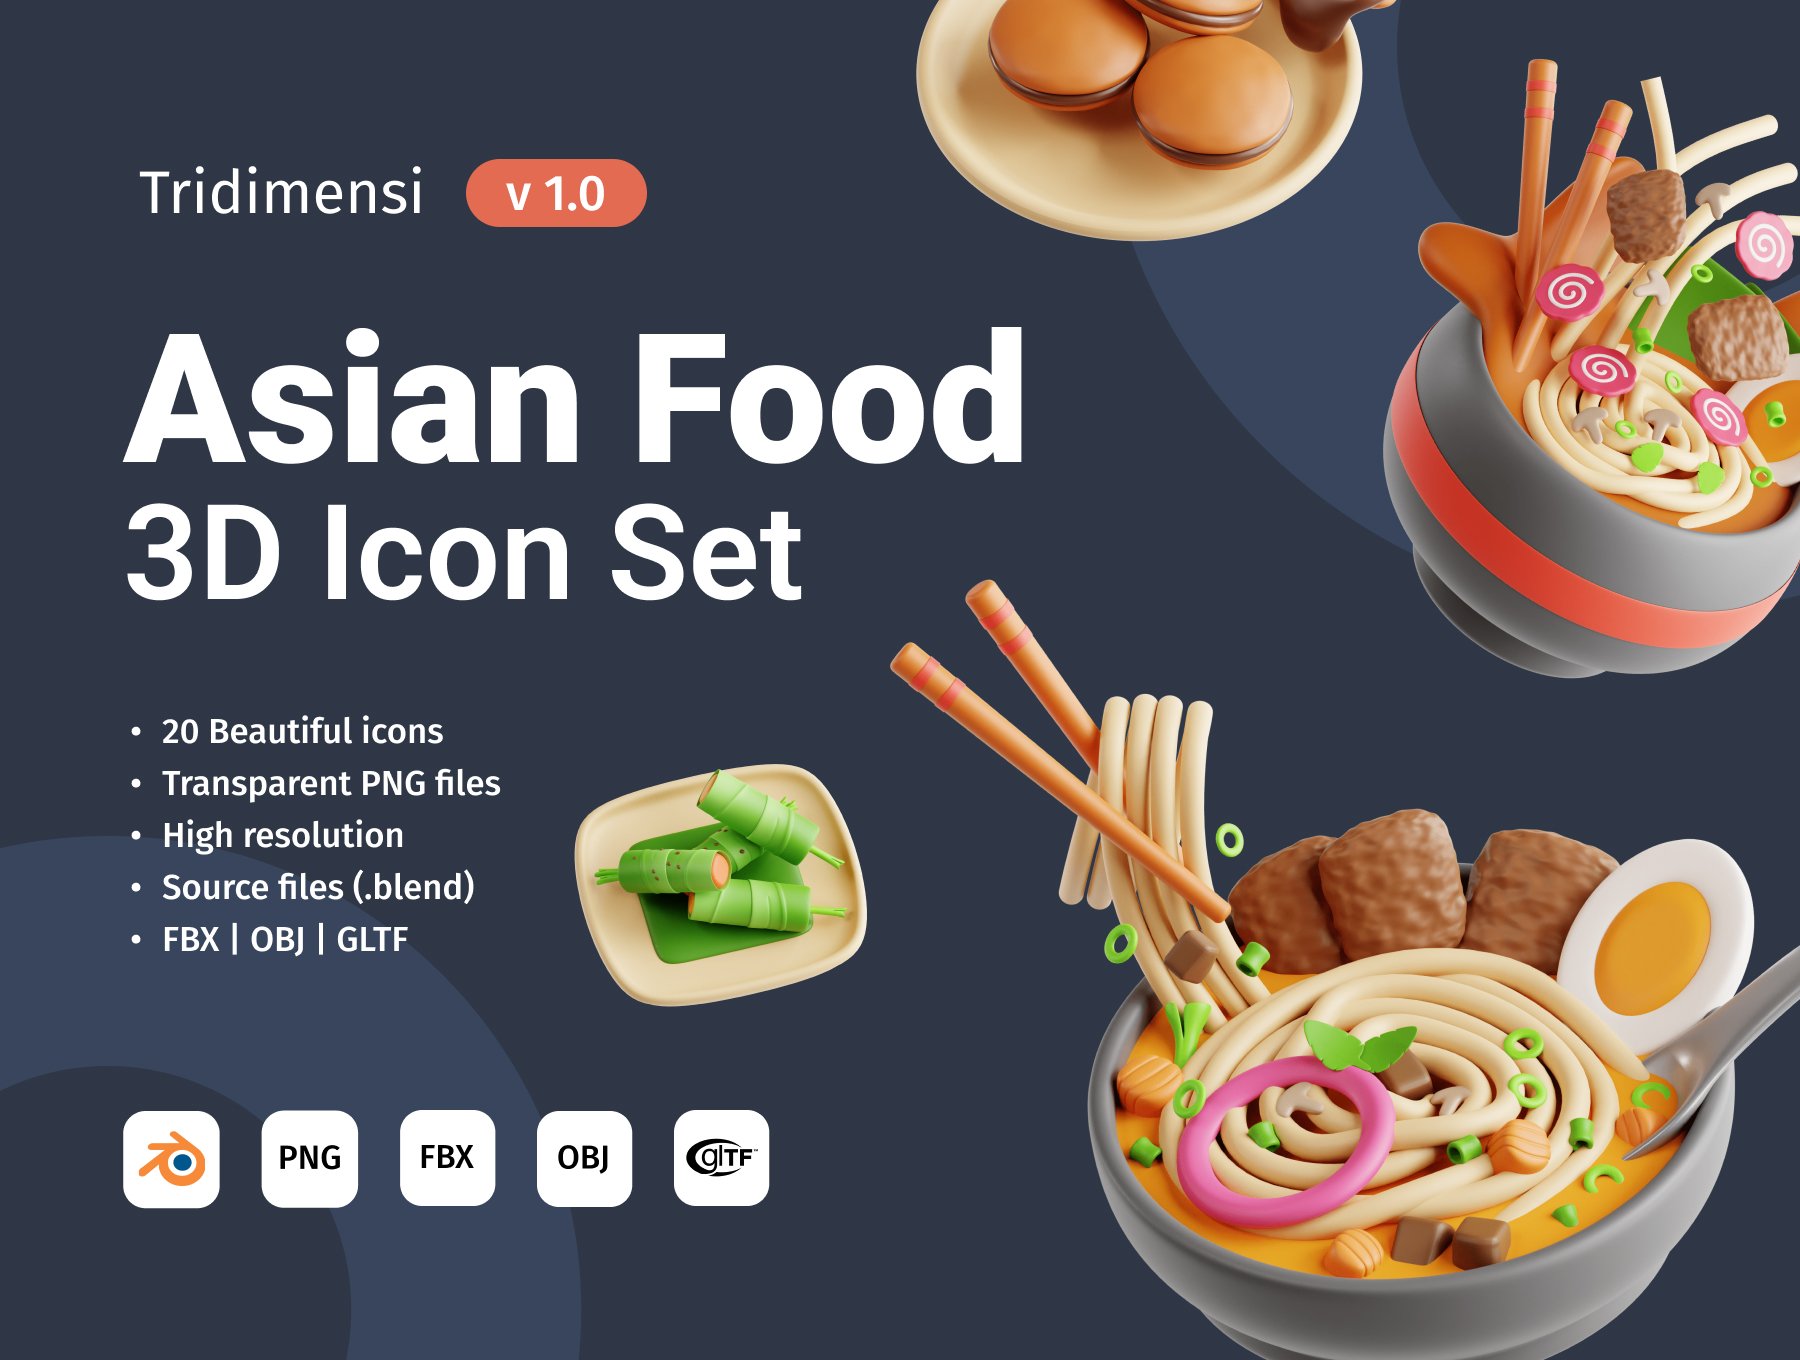 3D亚洲美食食物图标合集 Asian Food 3D lcon Set